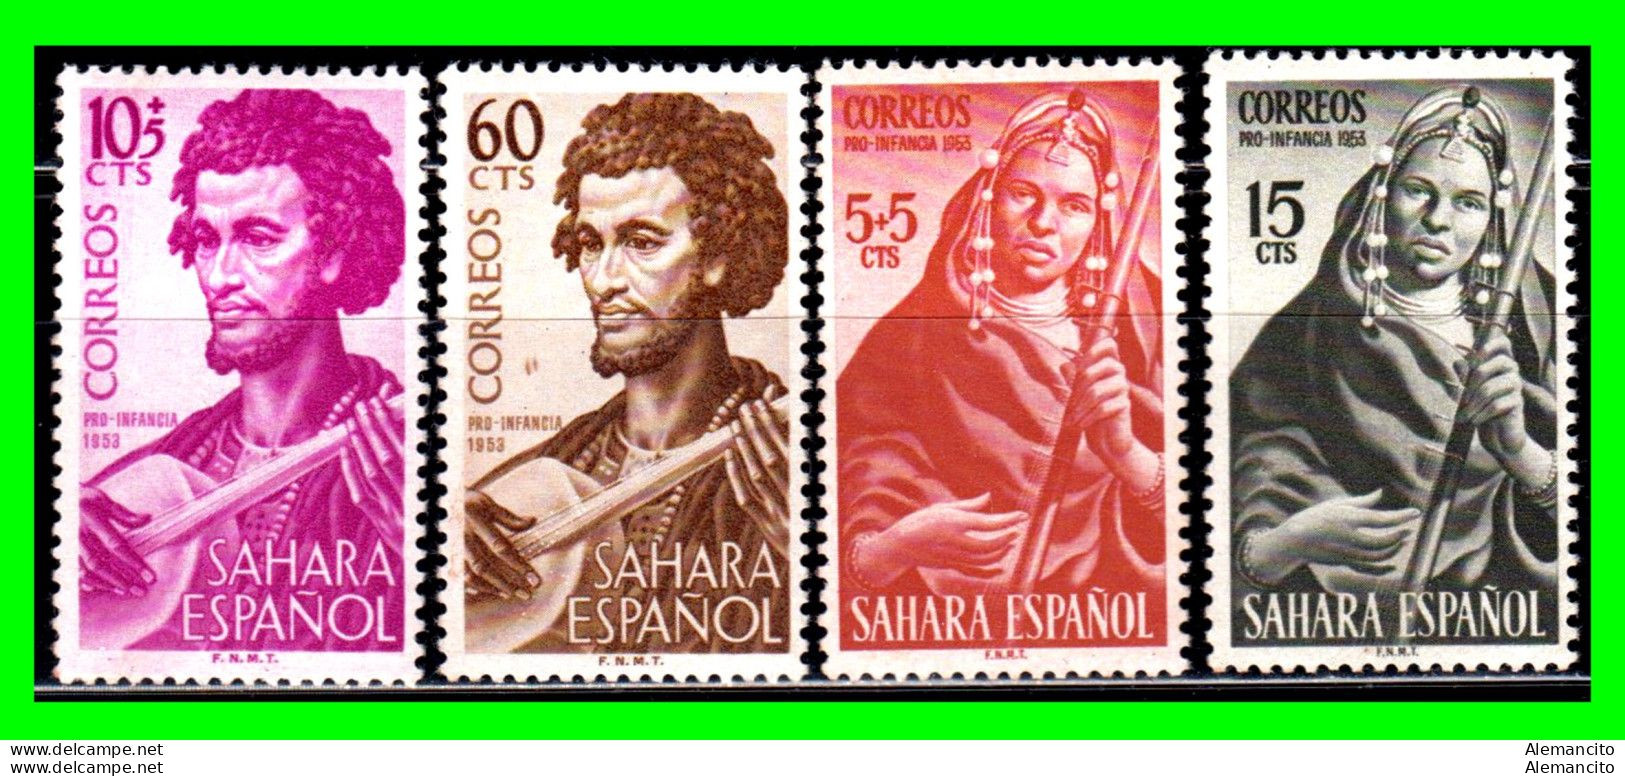 ESPAÑA COLONIAS ESPAÑOLAS (SAHARA ESPAÑOL – AFRICA ) SERIE SELLOS DEL AÑO 1953 PRO INFANCIA - NUEVOS - - Sahara Español